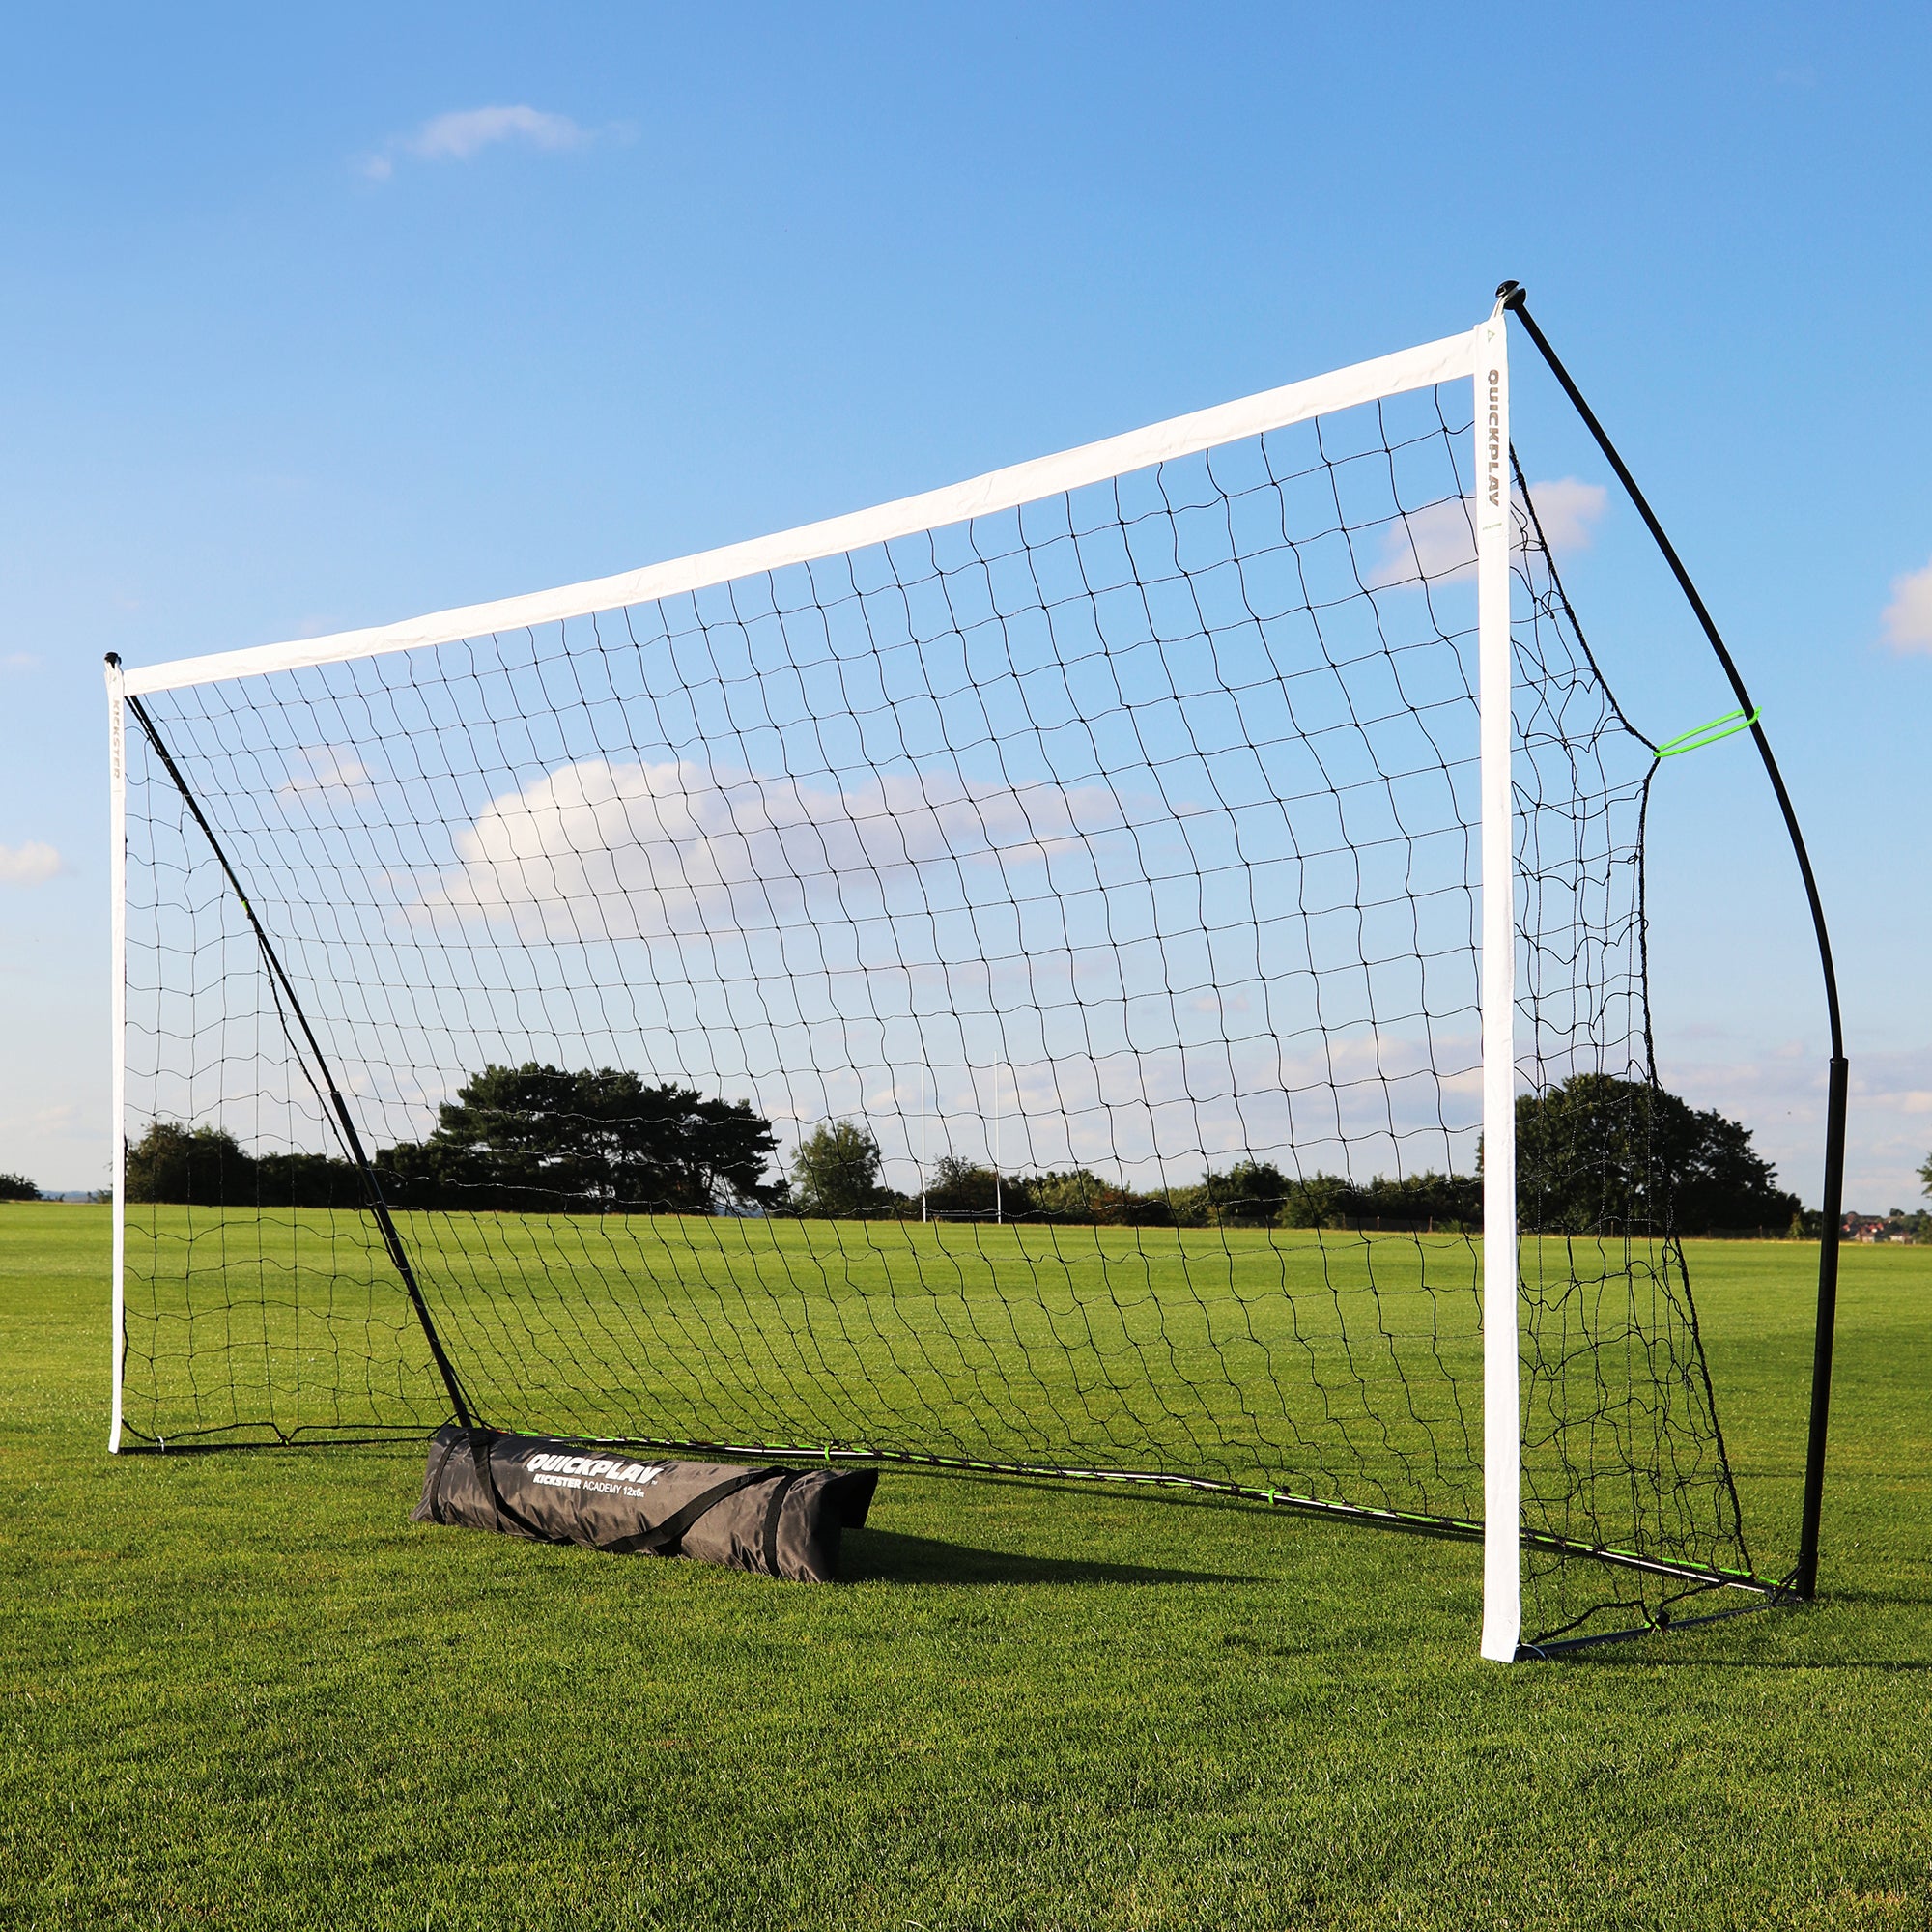 KICKSTER 12x6' Portable Soccer Goal | 2 Minute setup